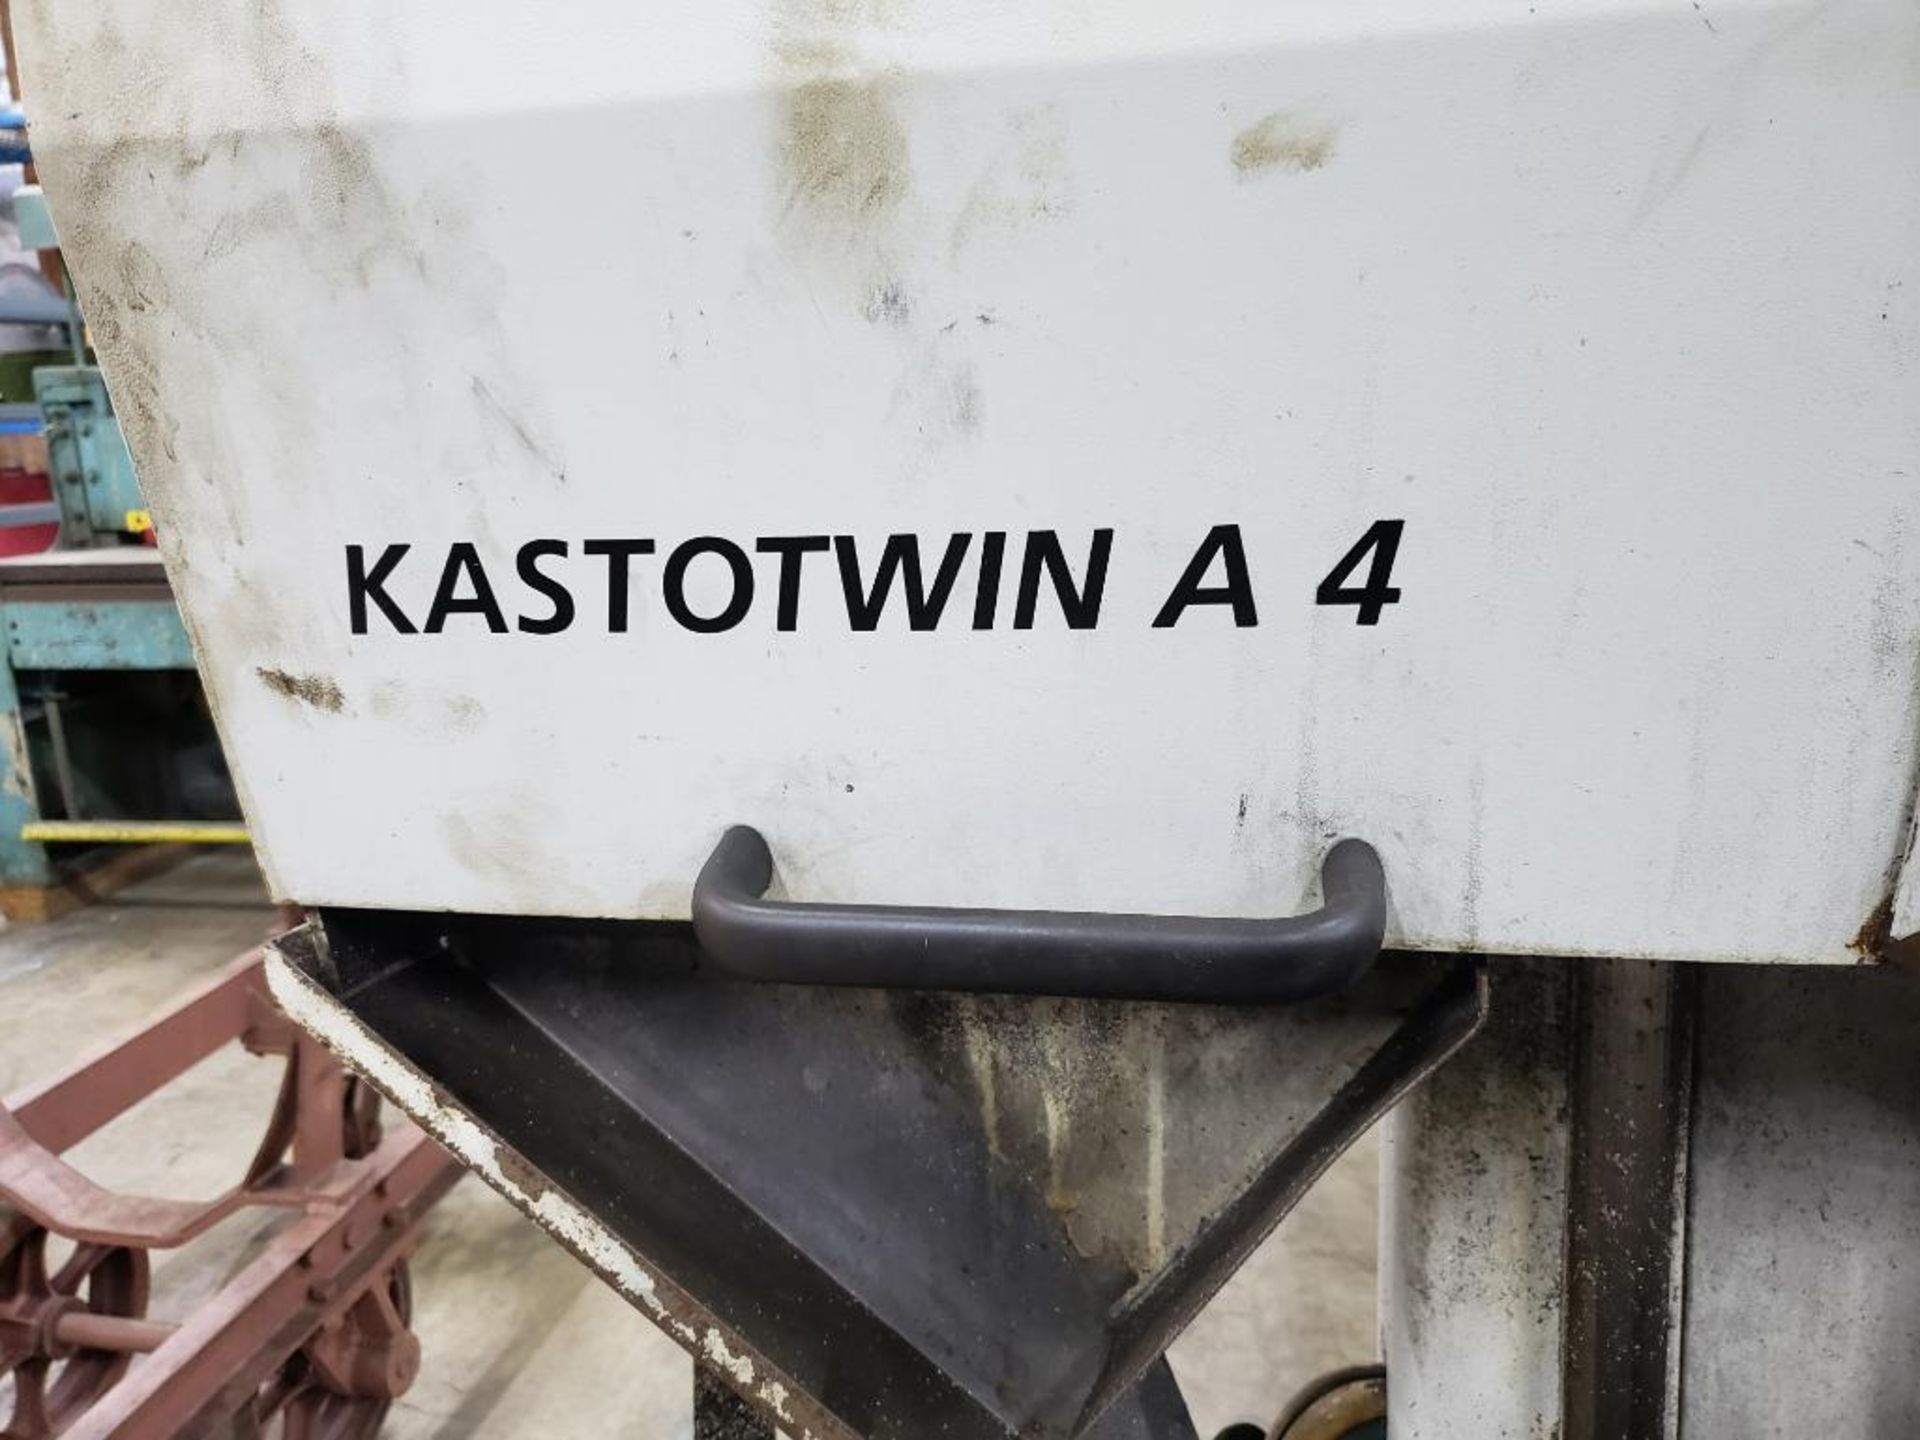 Kasto horizontal CNC band saw Model Kastotwin A4, 3 phase 440v, Mfg year 2000. Serial # 6428102047. - Image 4 of 32